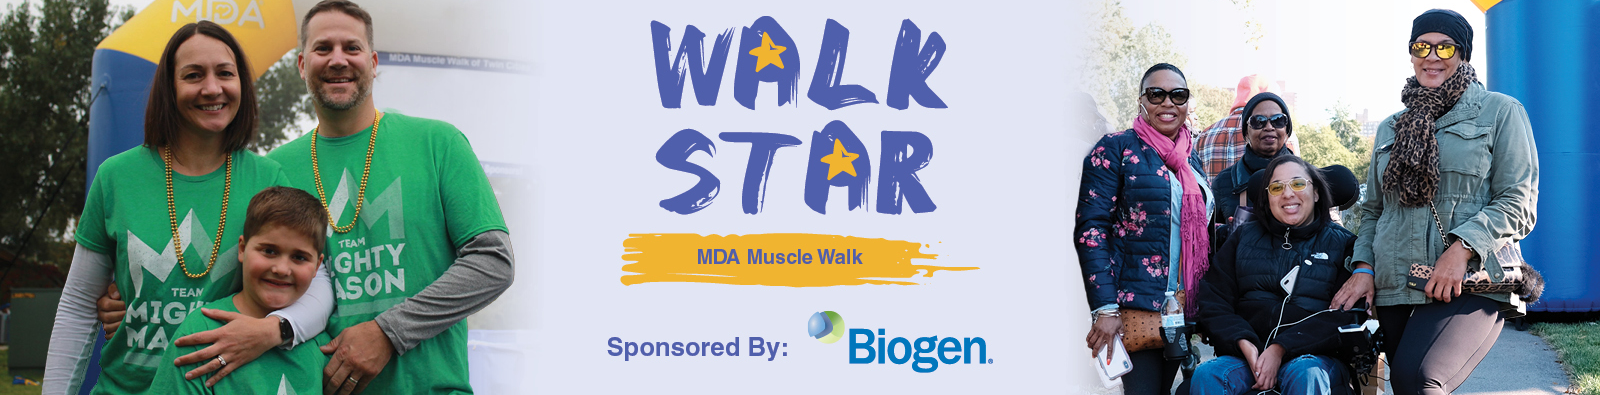 Walk Star Logo with MDA Muscle Walk text